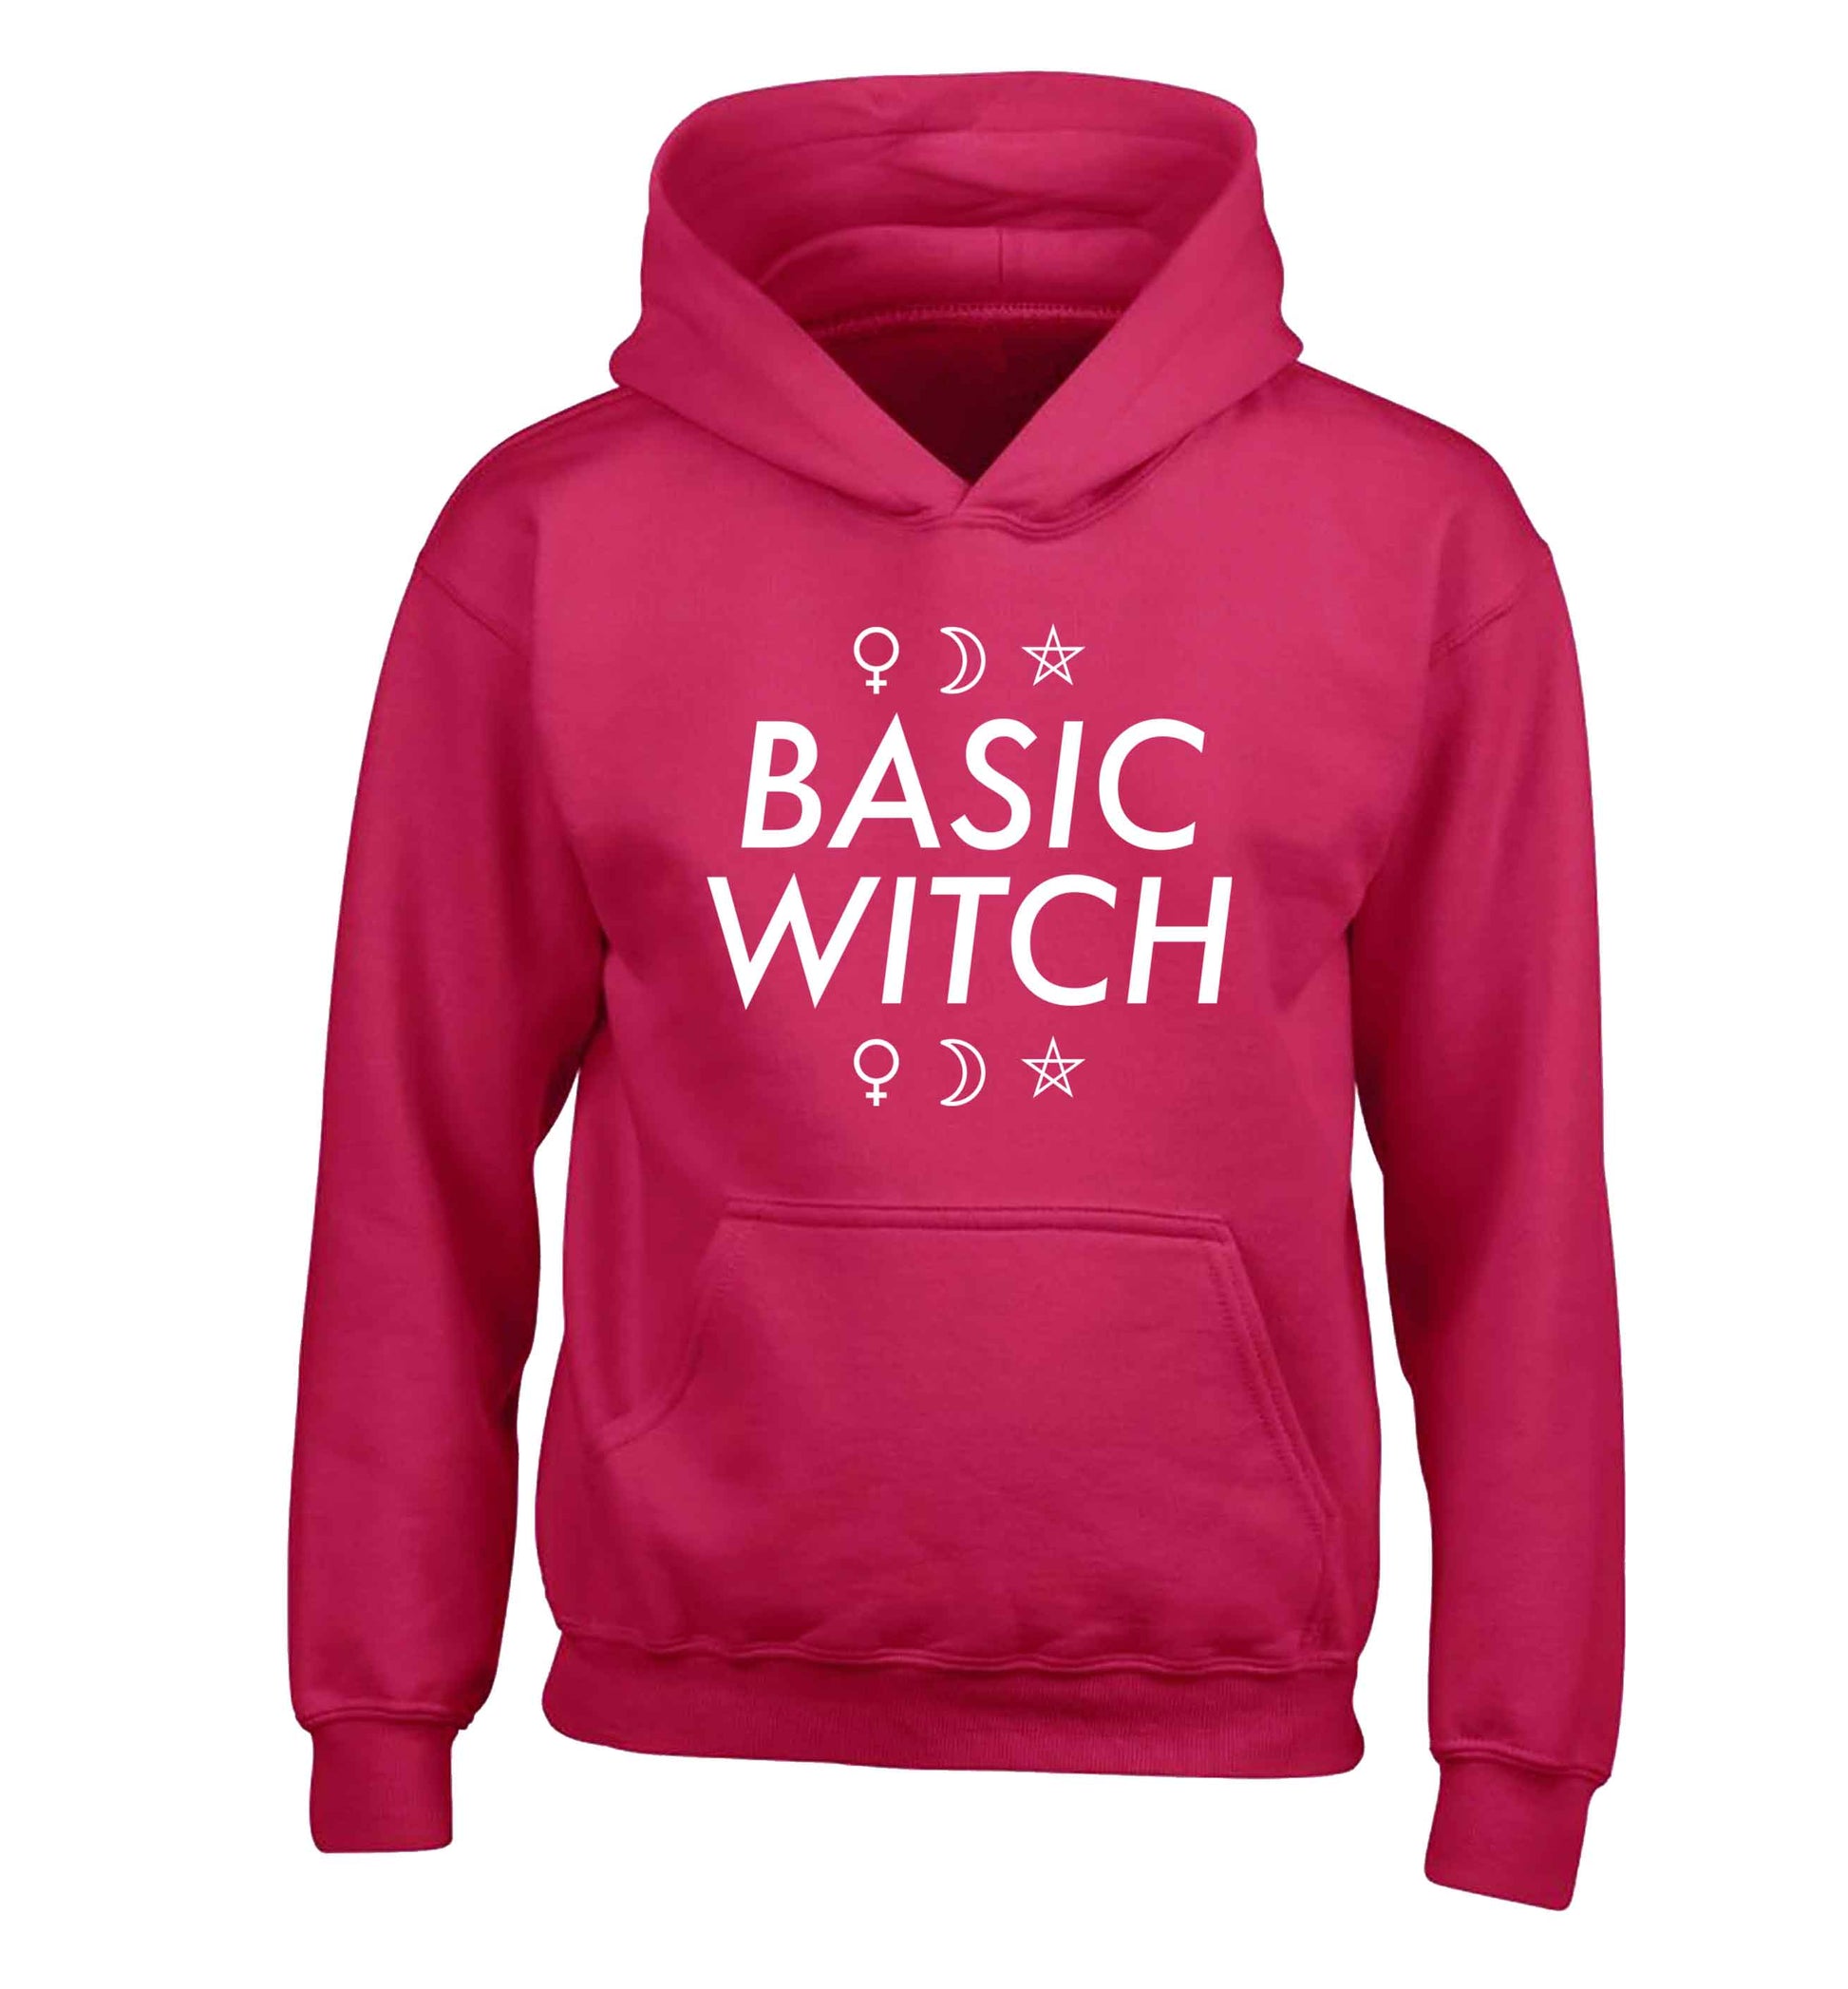 Basic witch 1 children's pink hoodie 12-13 Years